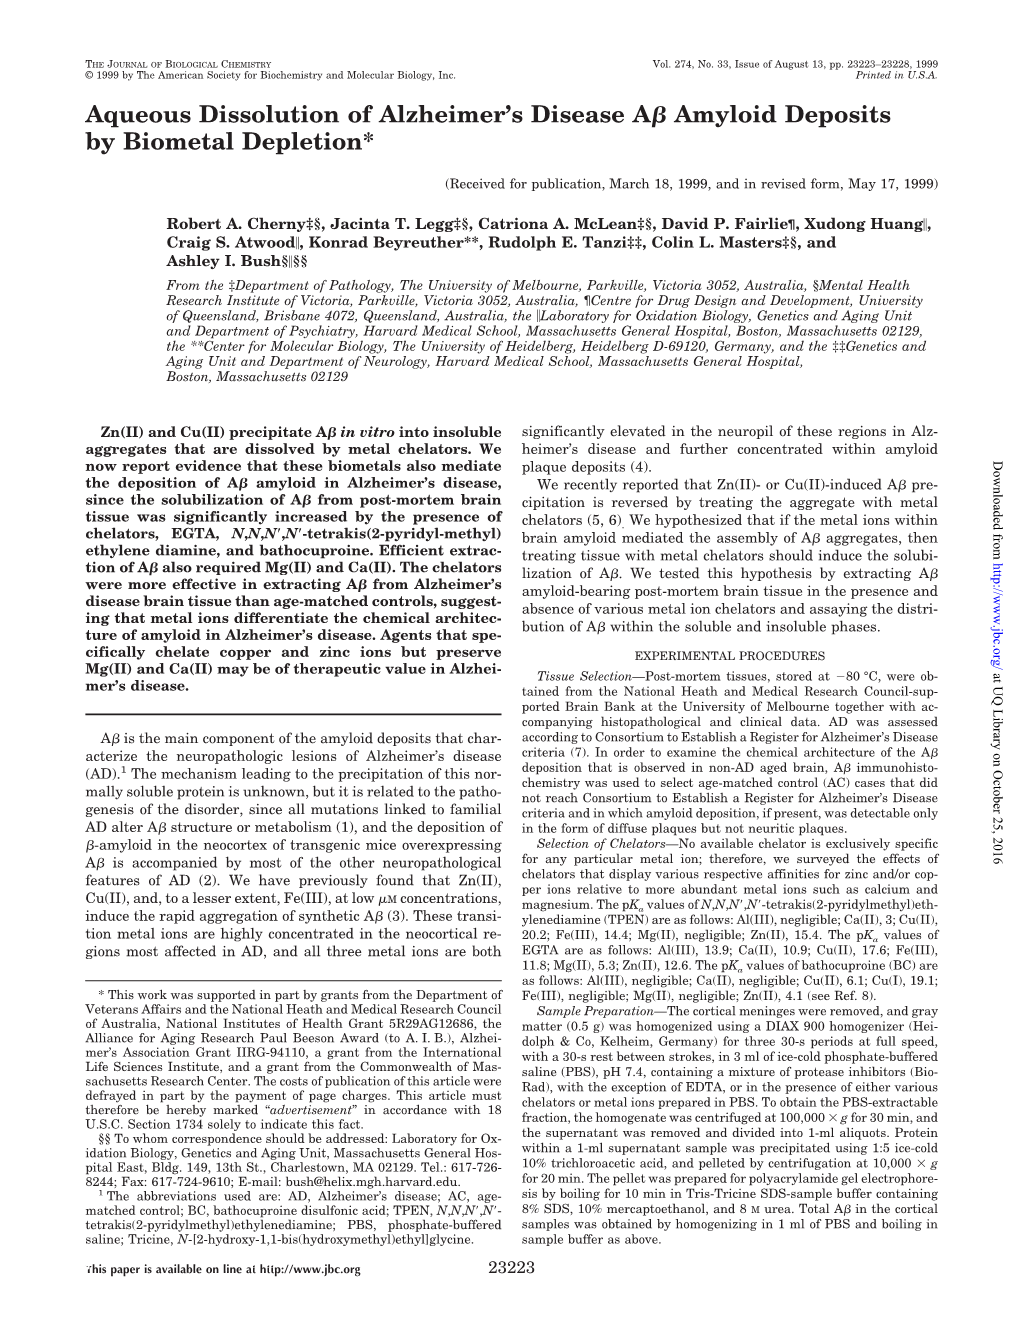 Aqueous Dissolution of Alzheimer's Disease AЯ Amyloid Deposits by Biometal Depletion*